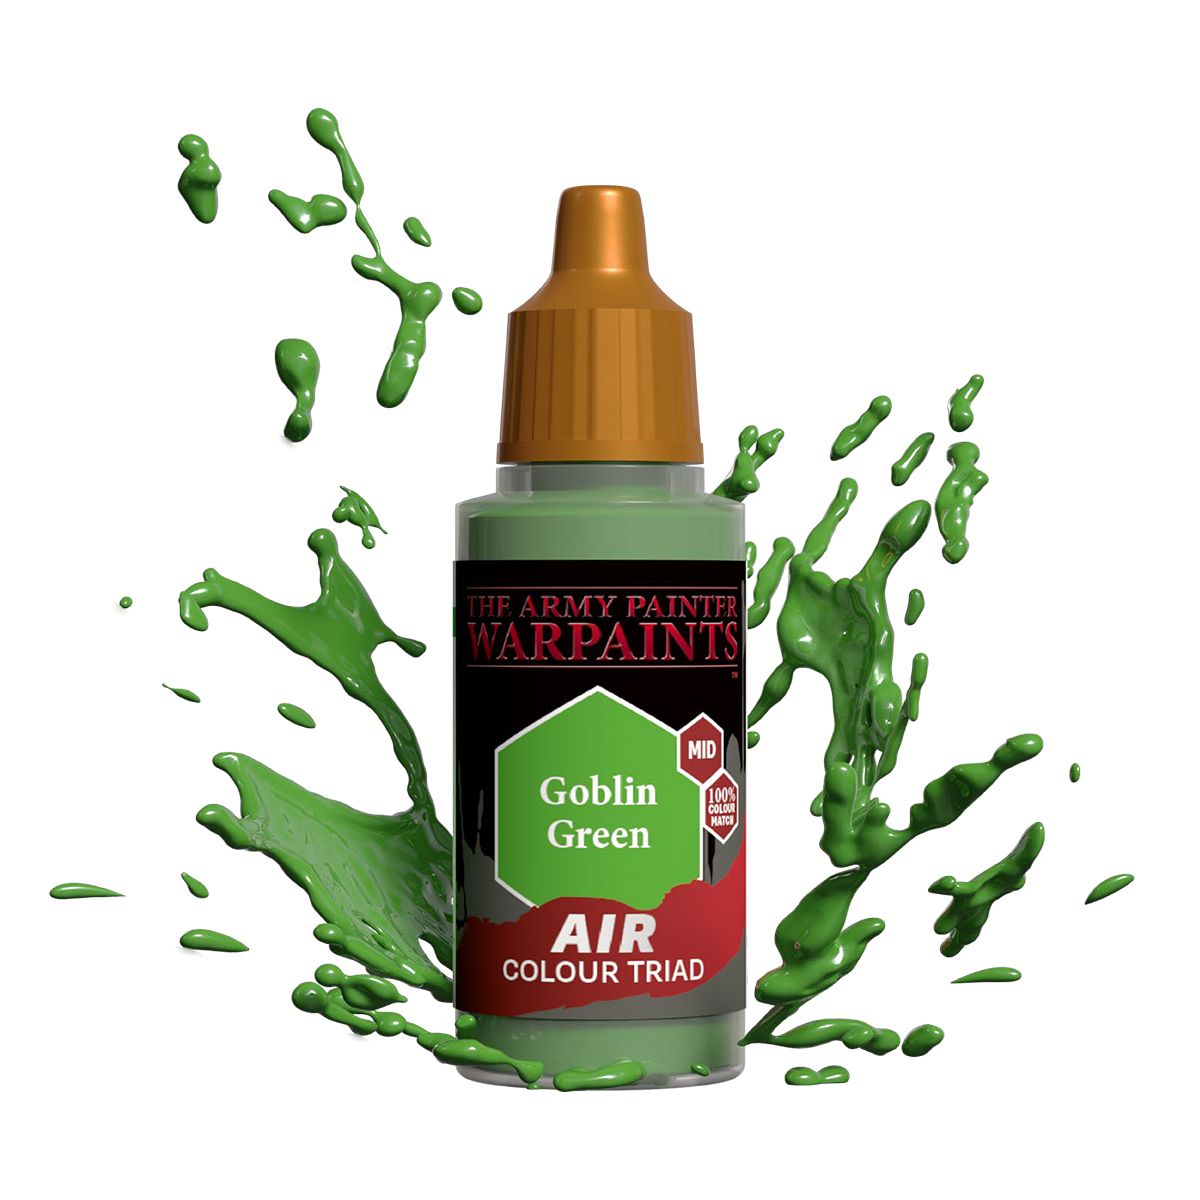 Army Painter Warpaints - Air Goblin Green Acrylic Paint 18ml